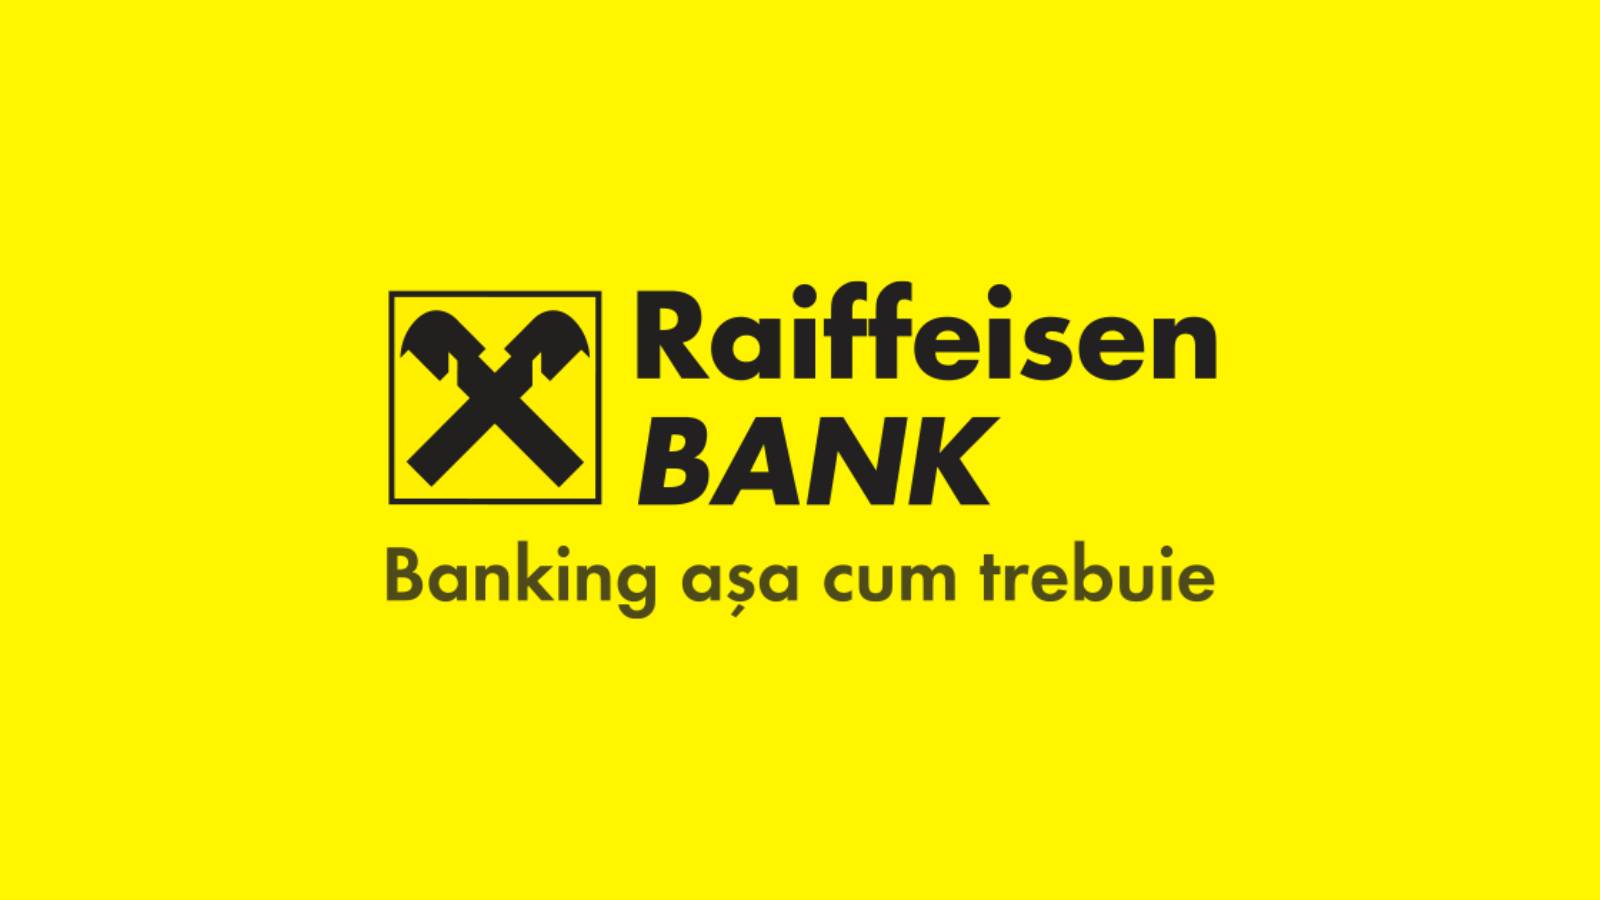 Raiffeisen Bank recommendation